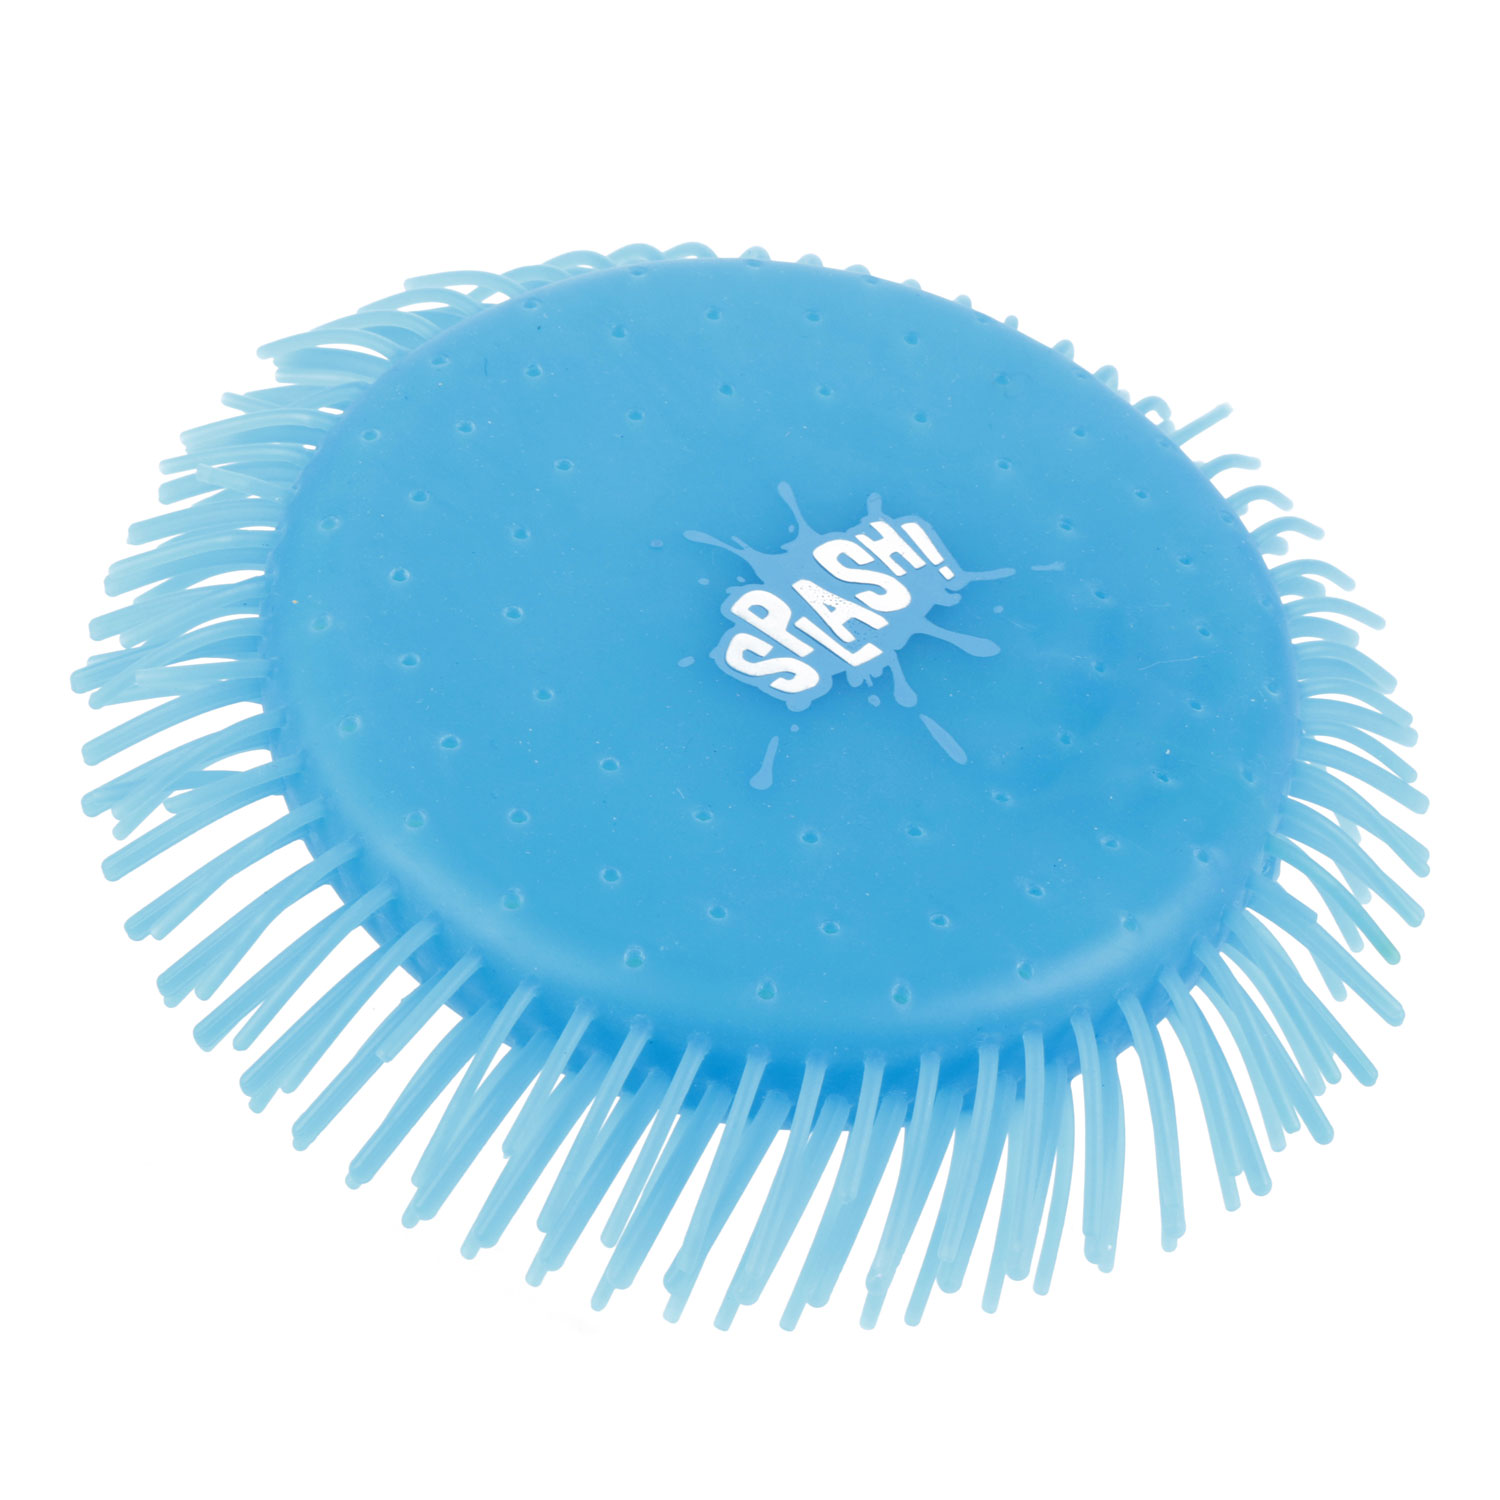 Splash Puffer Waterfrisbee, 18cm